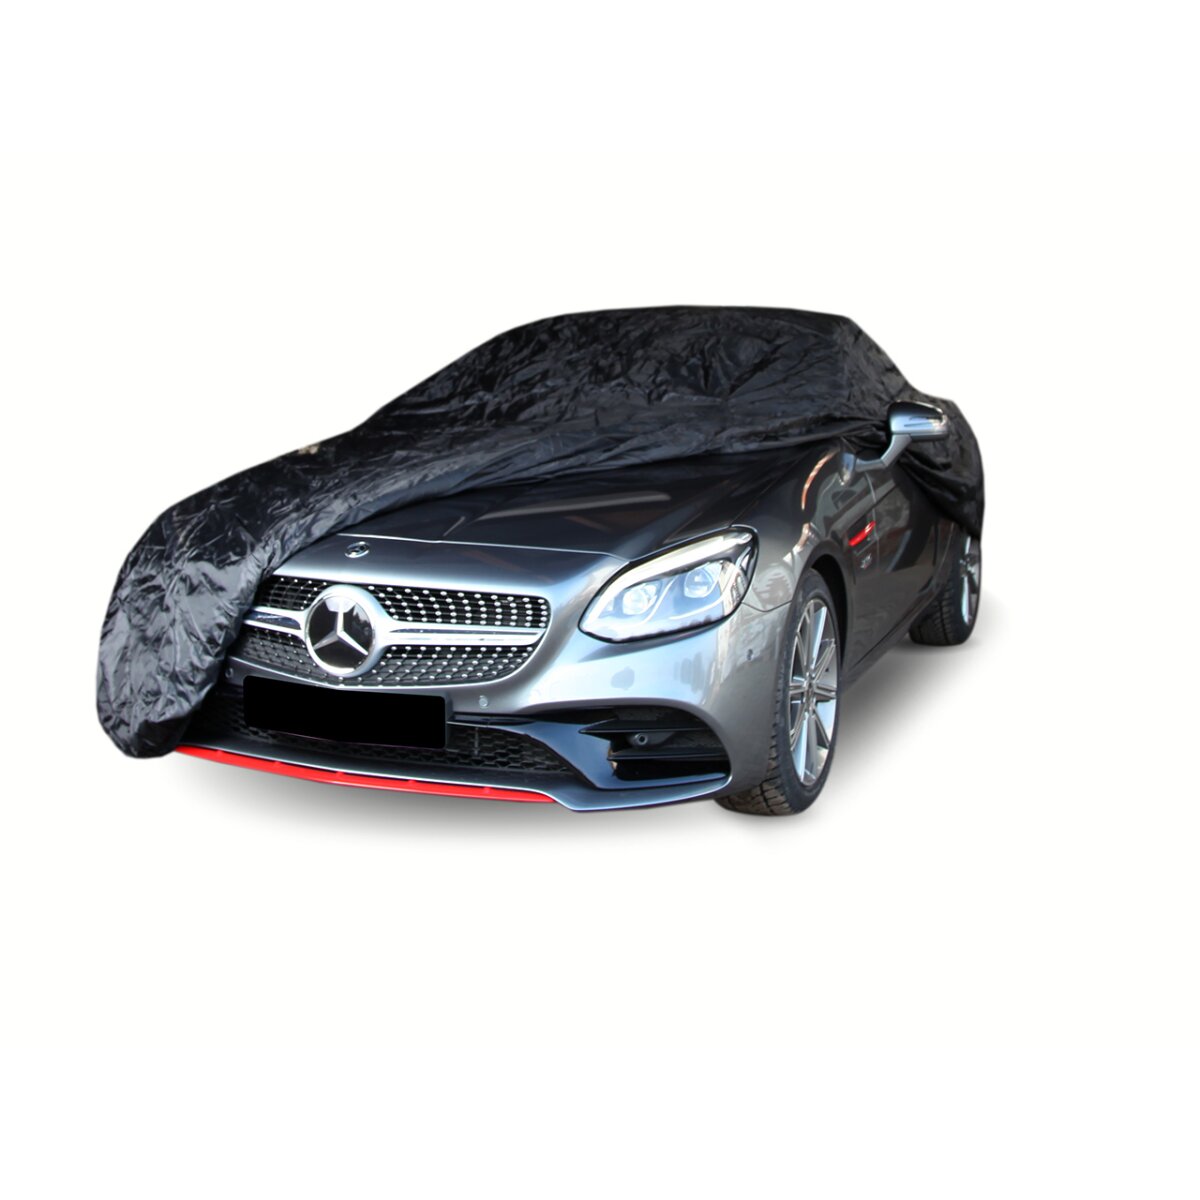 https://www.autoabdeckung.com/media/image/product/11706/lg/autoabdeckung-car-cover-fuer-audi-a6-c8-limousine-4k-f2.jpg